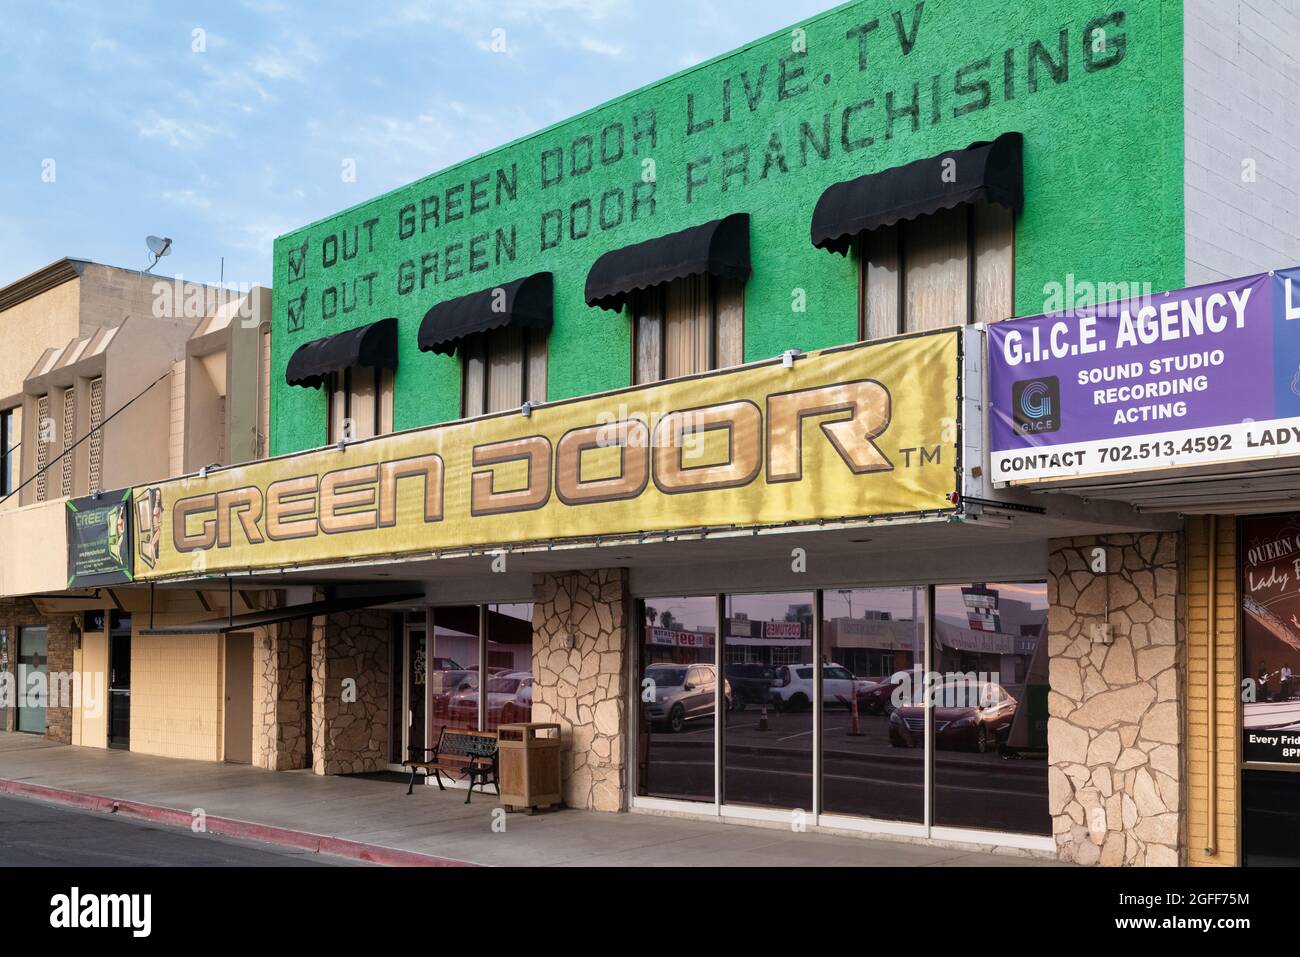 Green Door swingers club, Las Vegas, Nevada Stock Photo hq photo